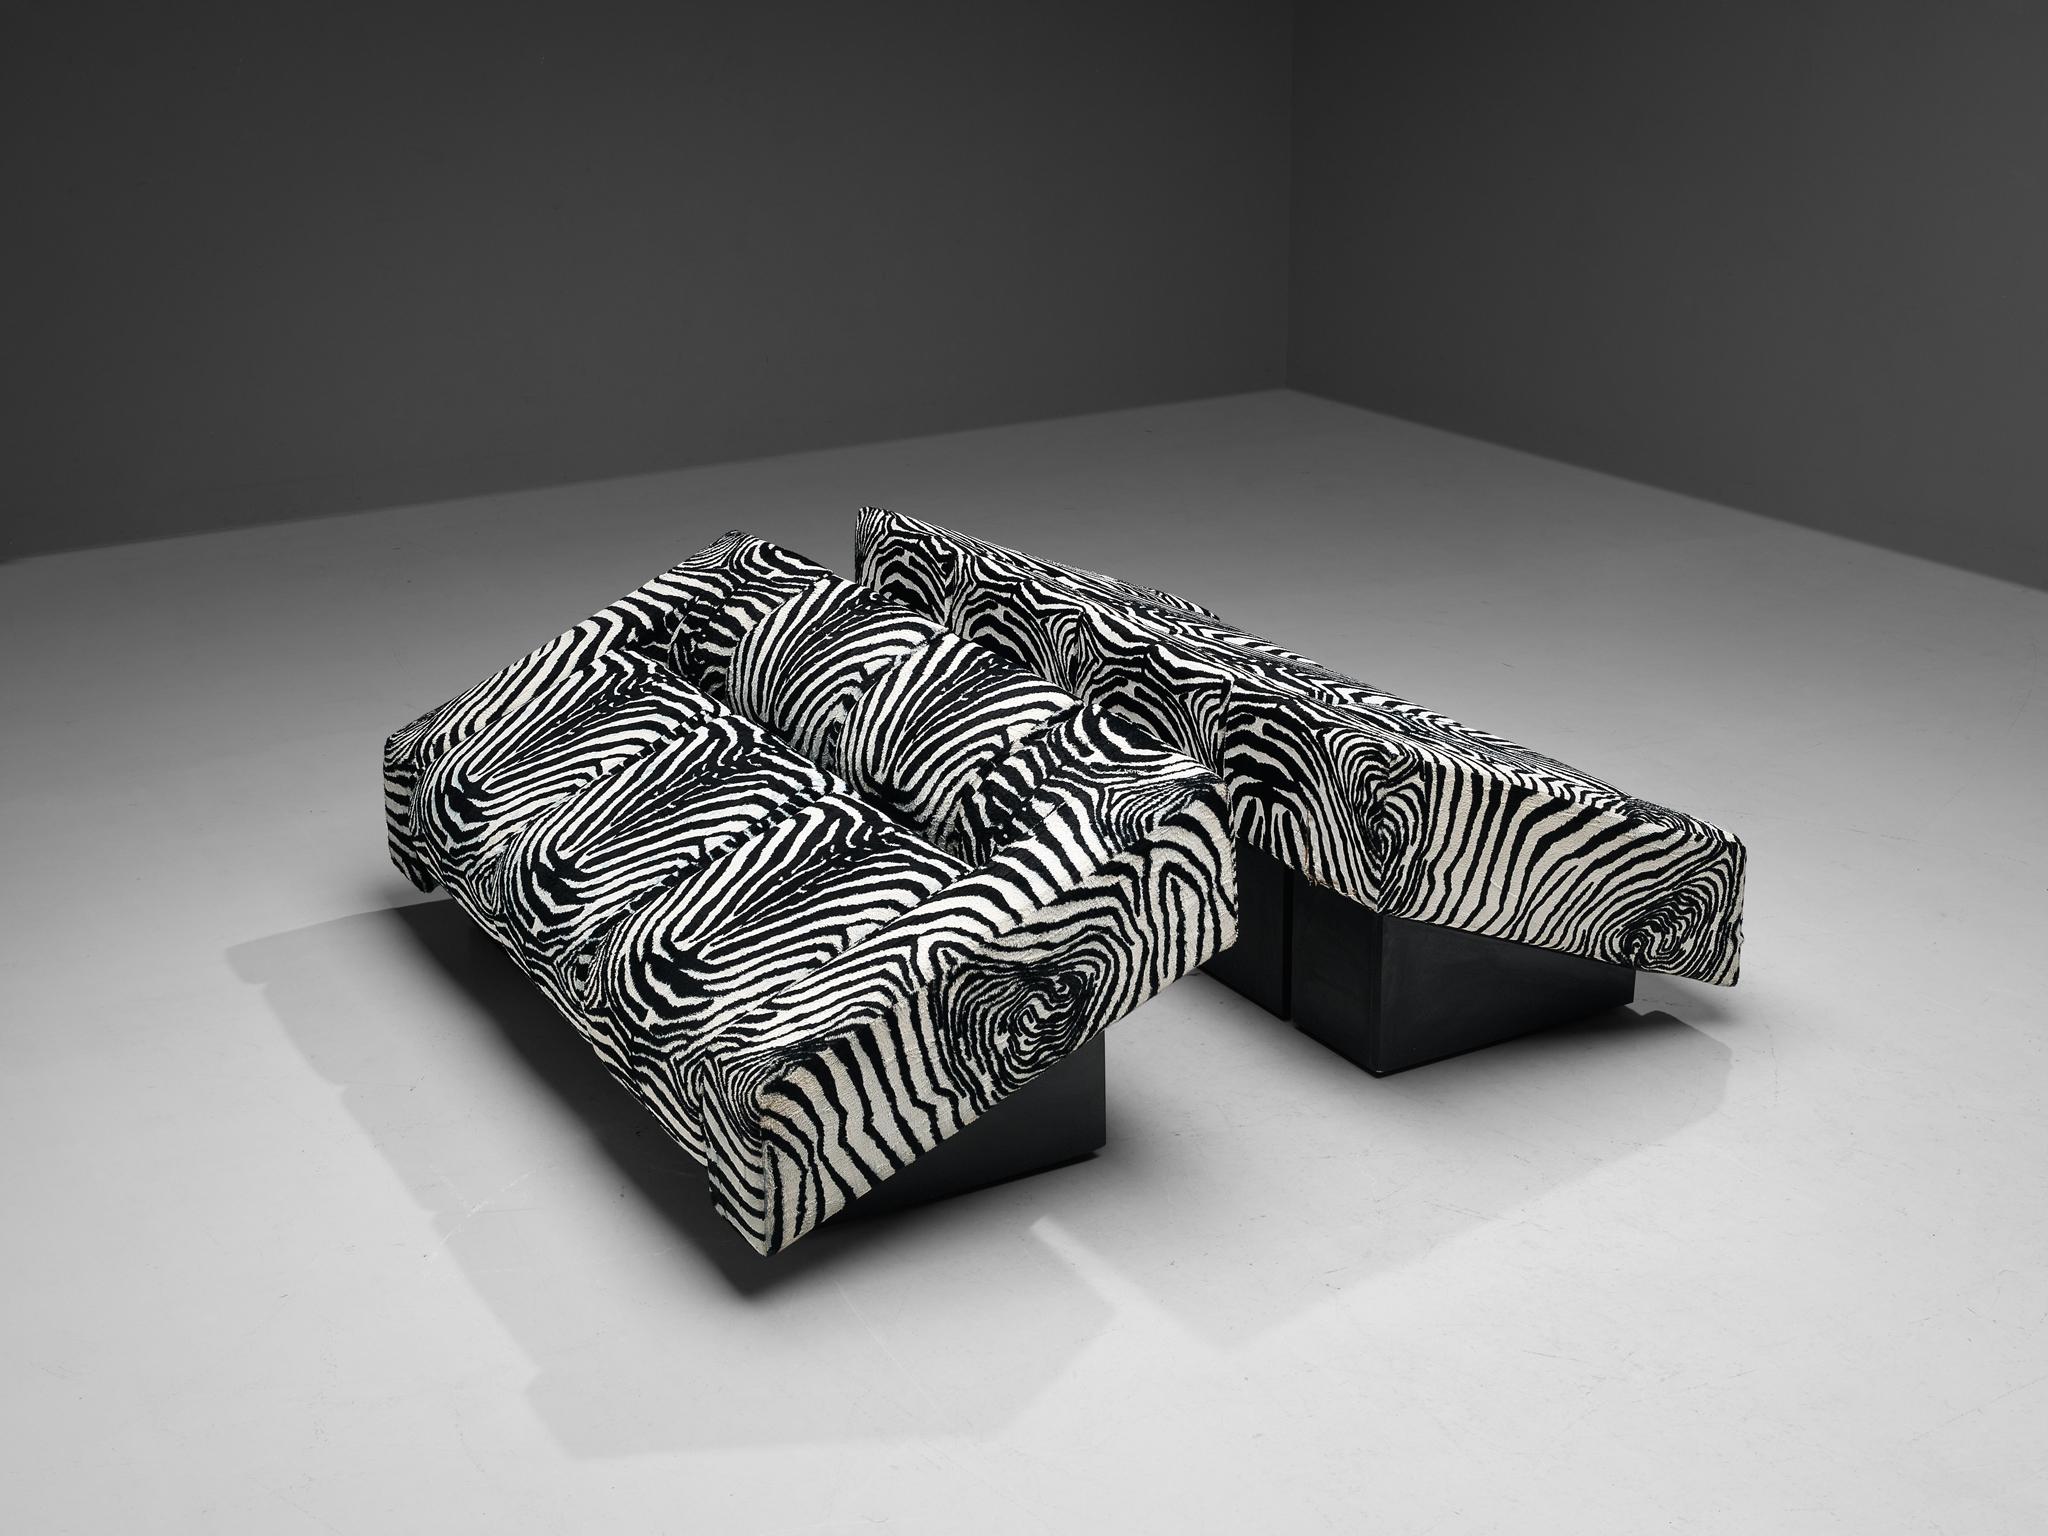 Mario Botta for Alias Pair of 'Obliqua' Sofa's in Zebra Print Upholstery  1